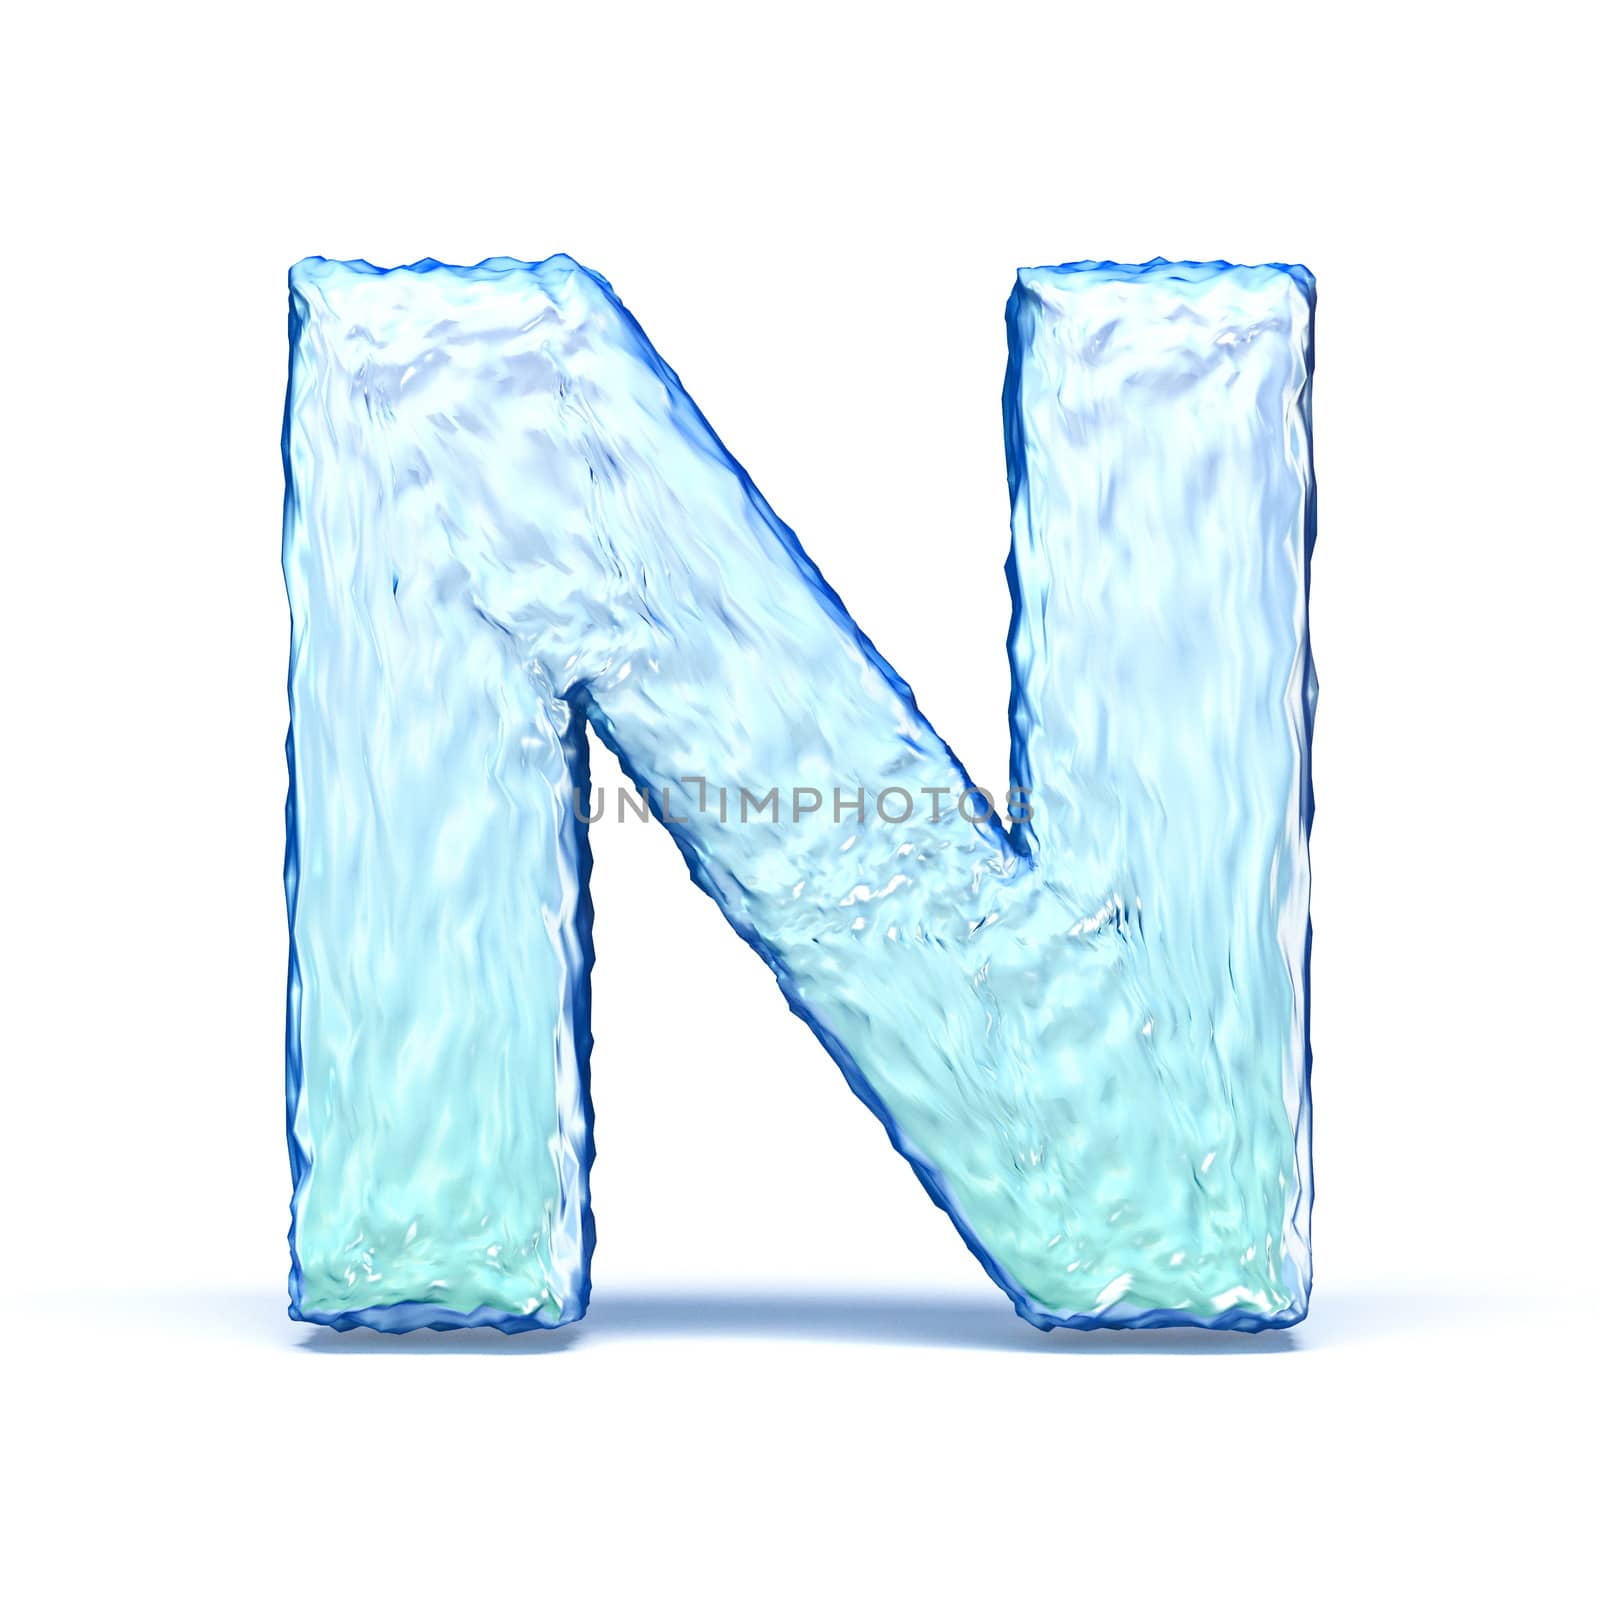 Ice crystal font letter N 3D render illustration isolated on white background